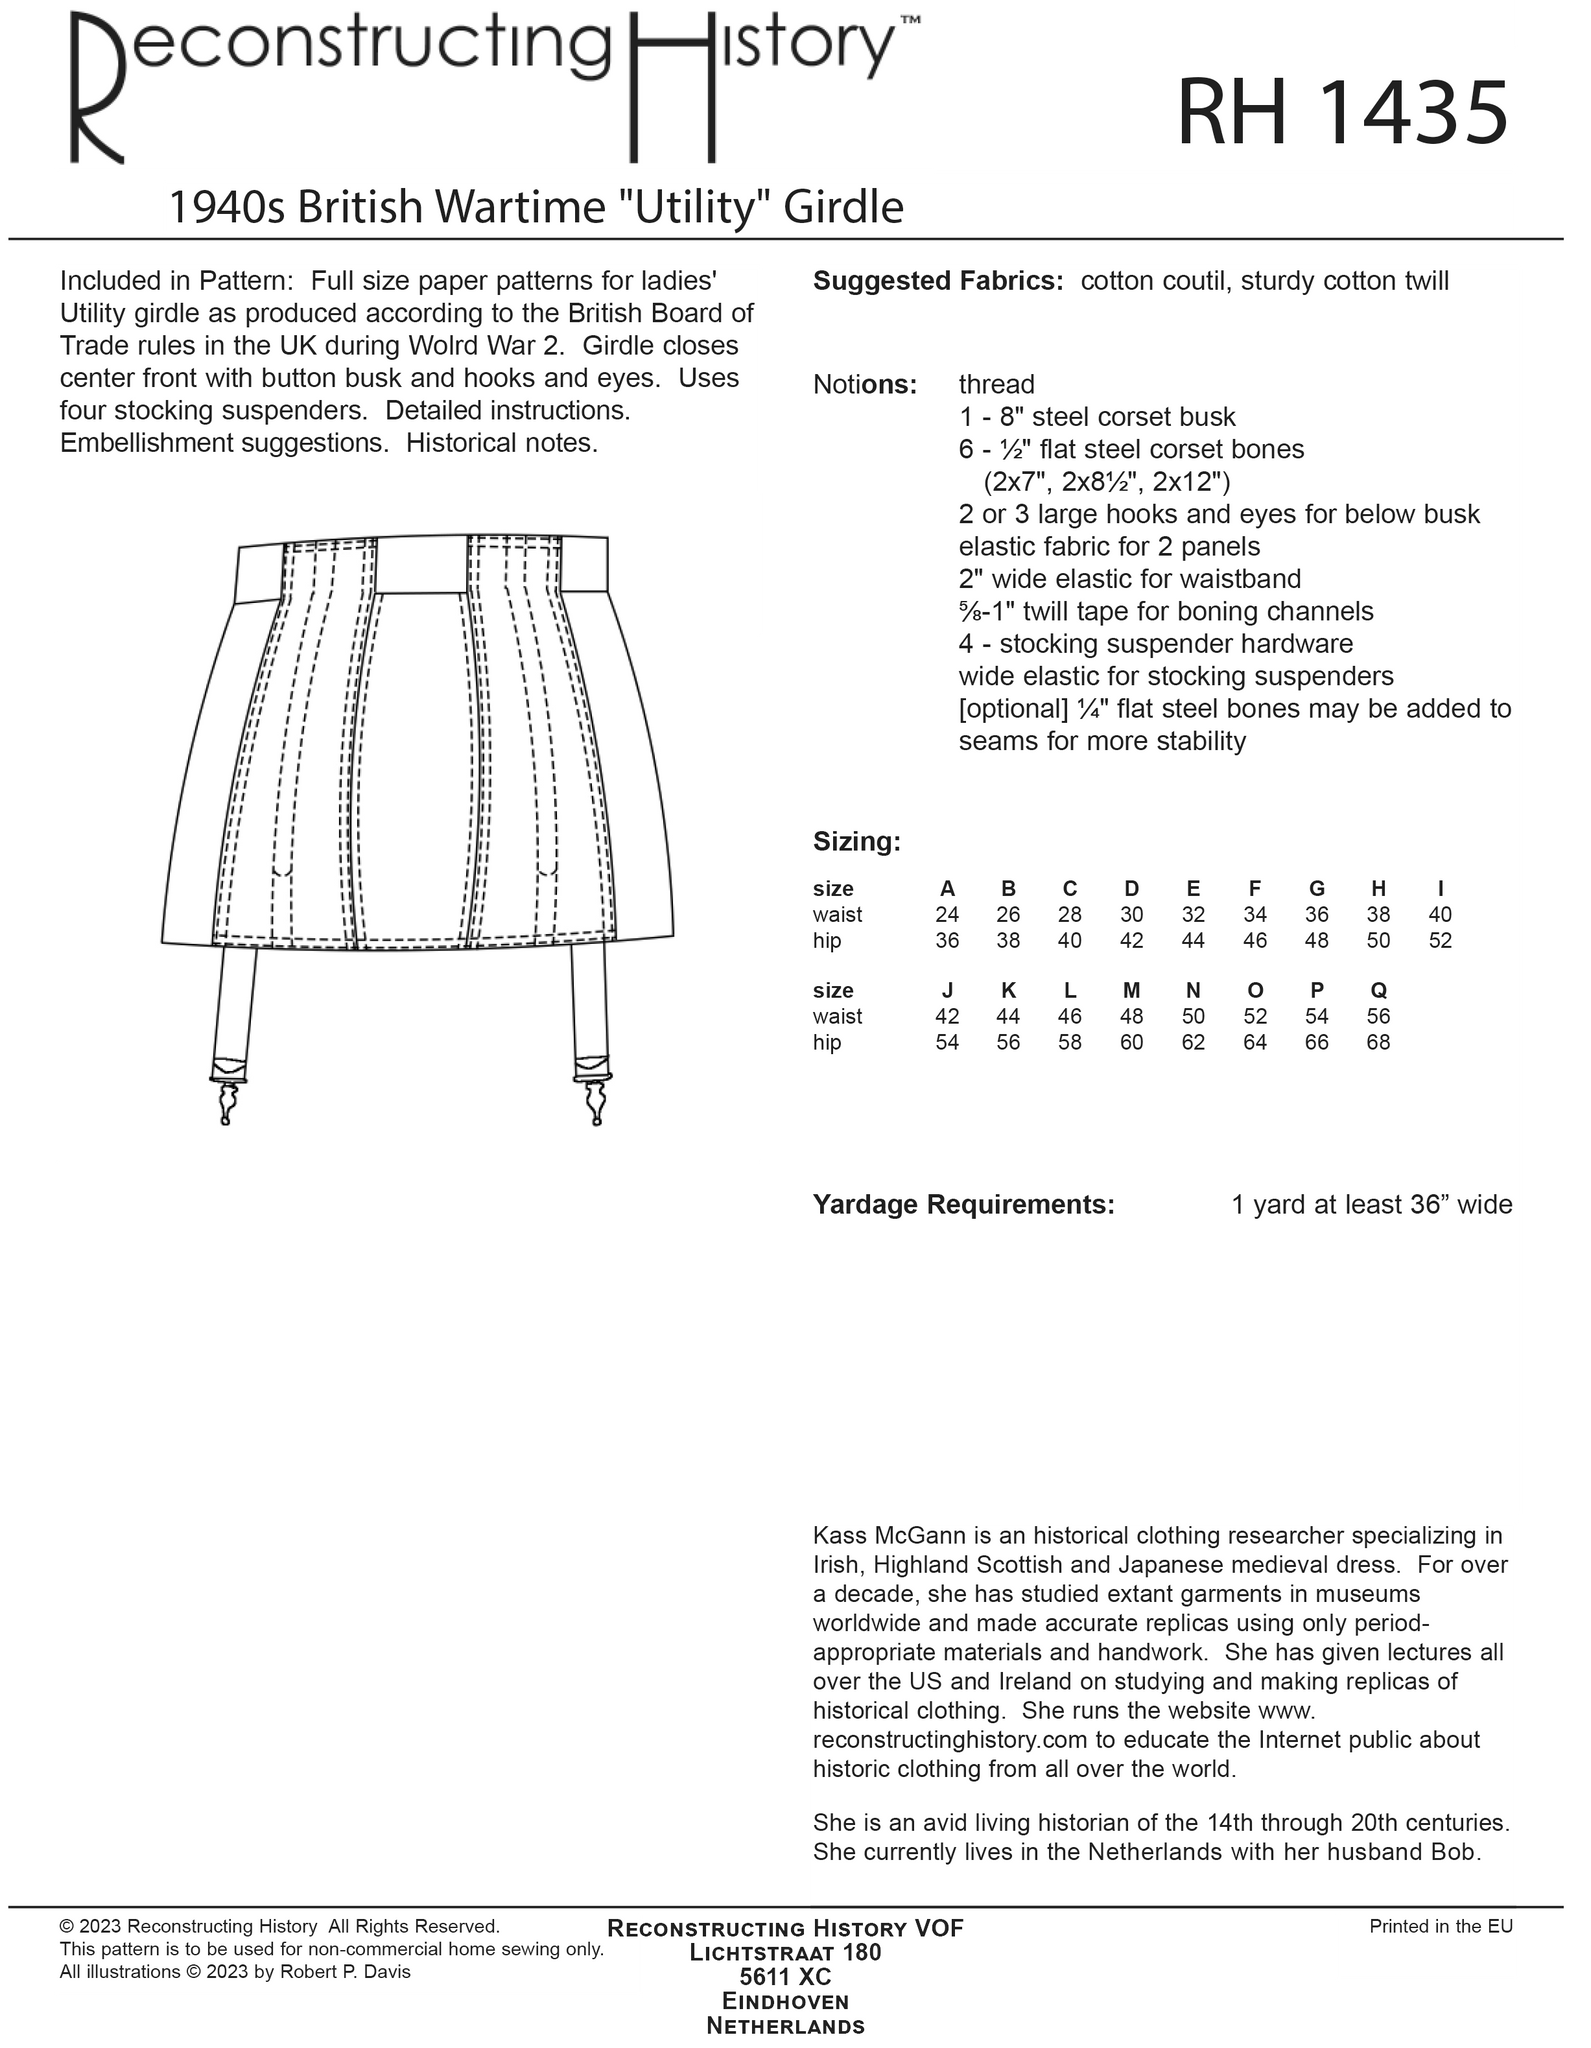 RH1435 — 1940s British Utility Girdle sewing pattern